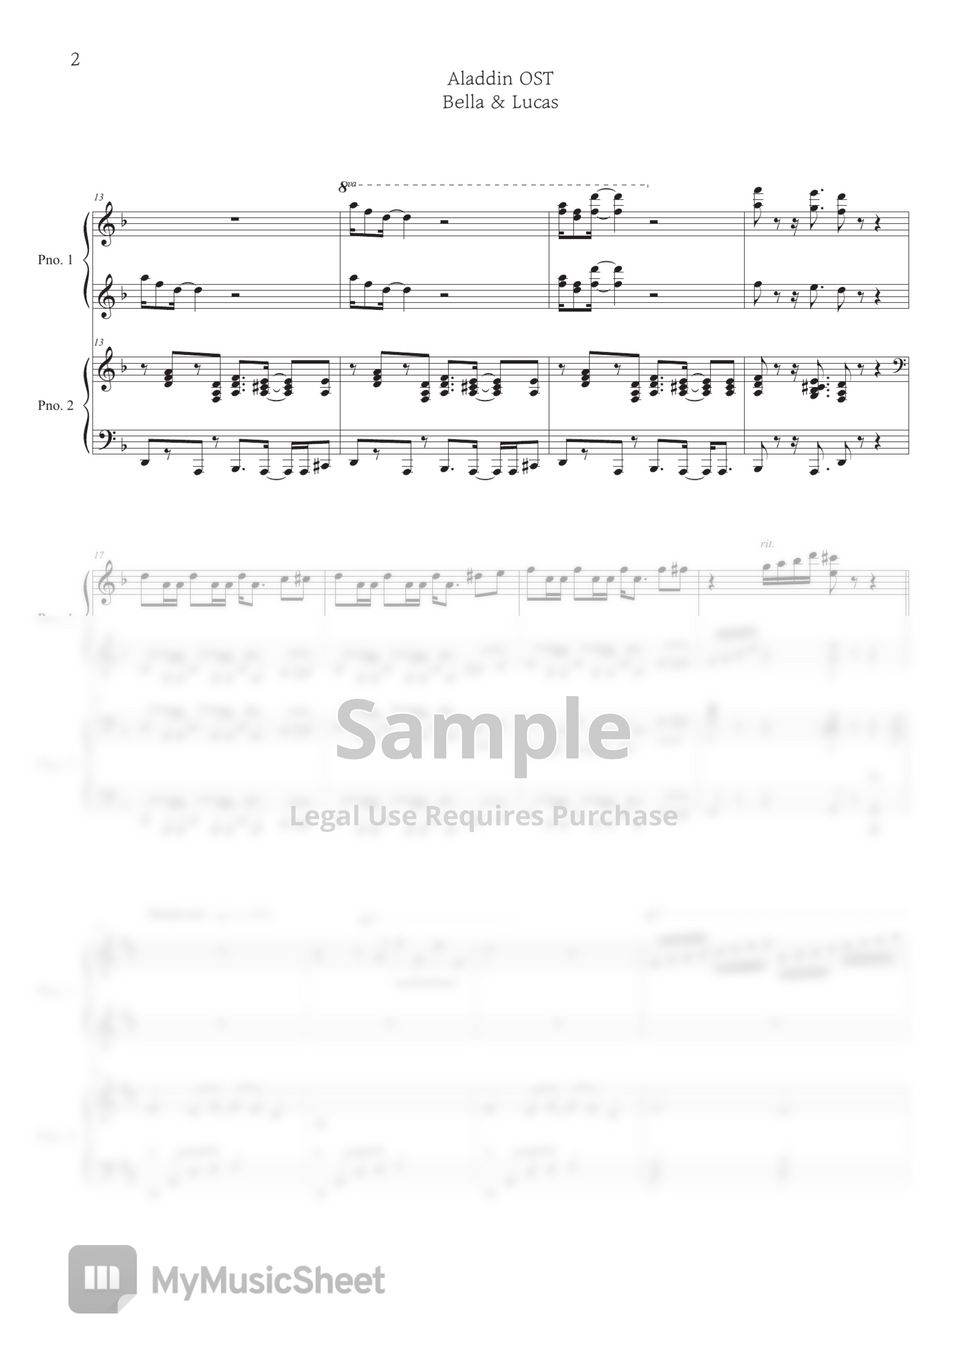 Medley (4hands piano) - Aladdin OST by BELLA&LUCAS